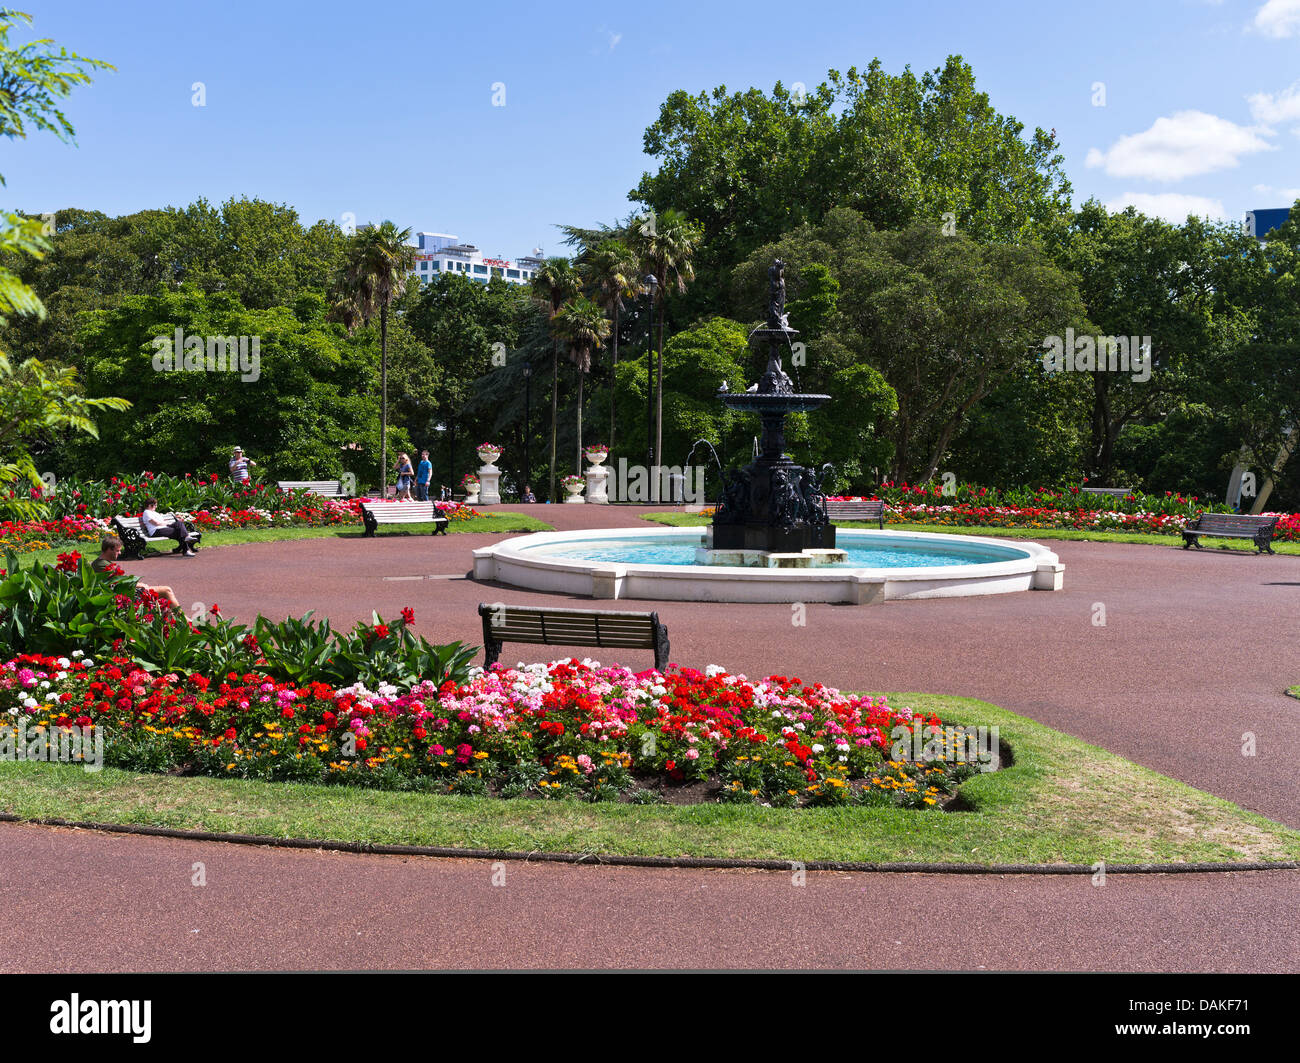 Dh Albert Park Auckland Nuova Zelanda gente seduta panca fontana rilassante piscina giardino dei fiori la città dei parchi Foto Stock